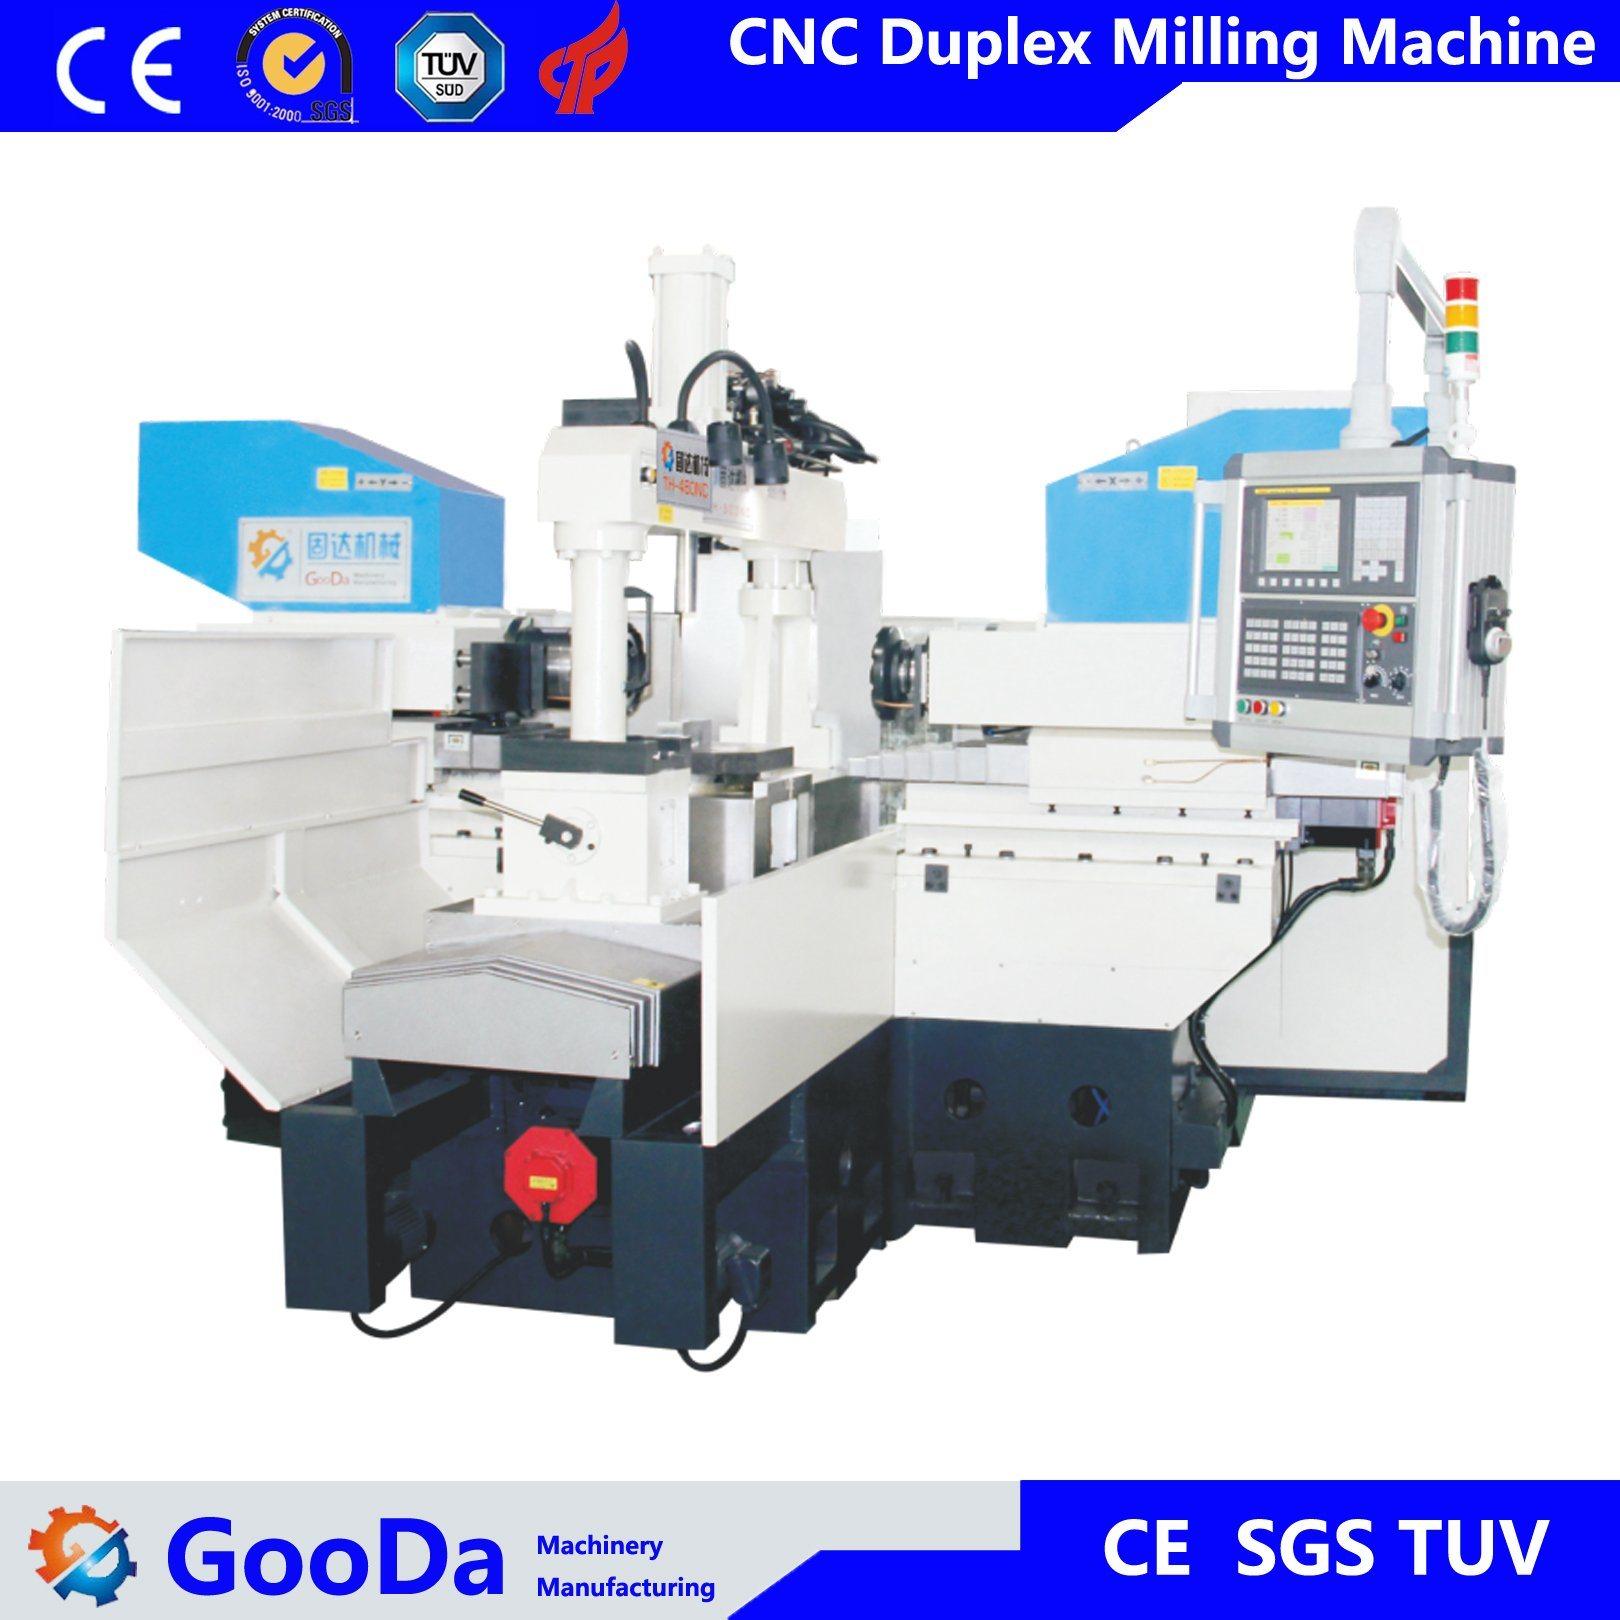 Powerful Twin Head CNC Duplex Milling Machine Precision Full Automatica Cutting